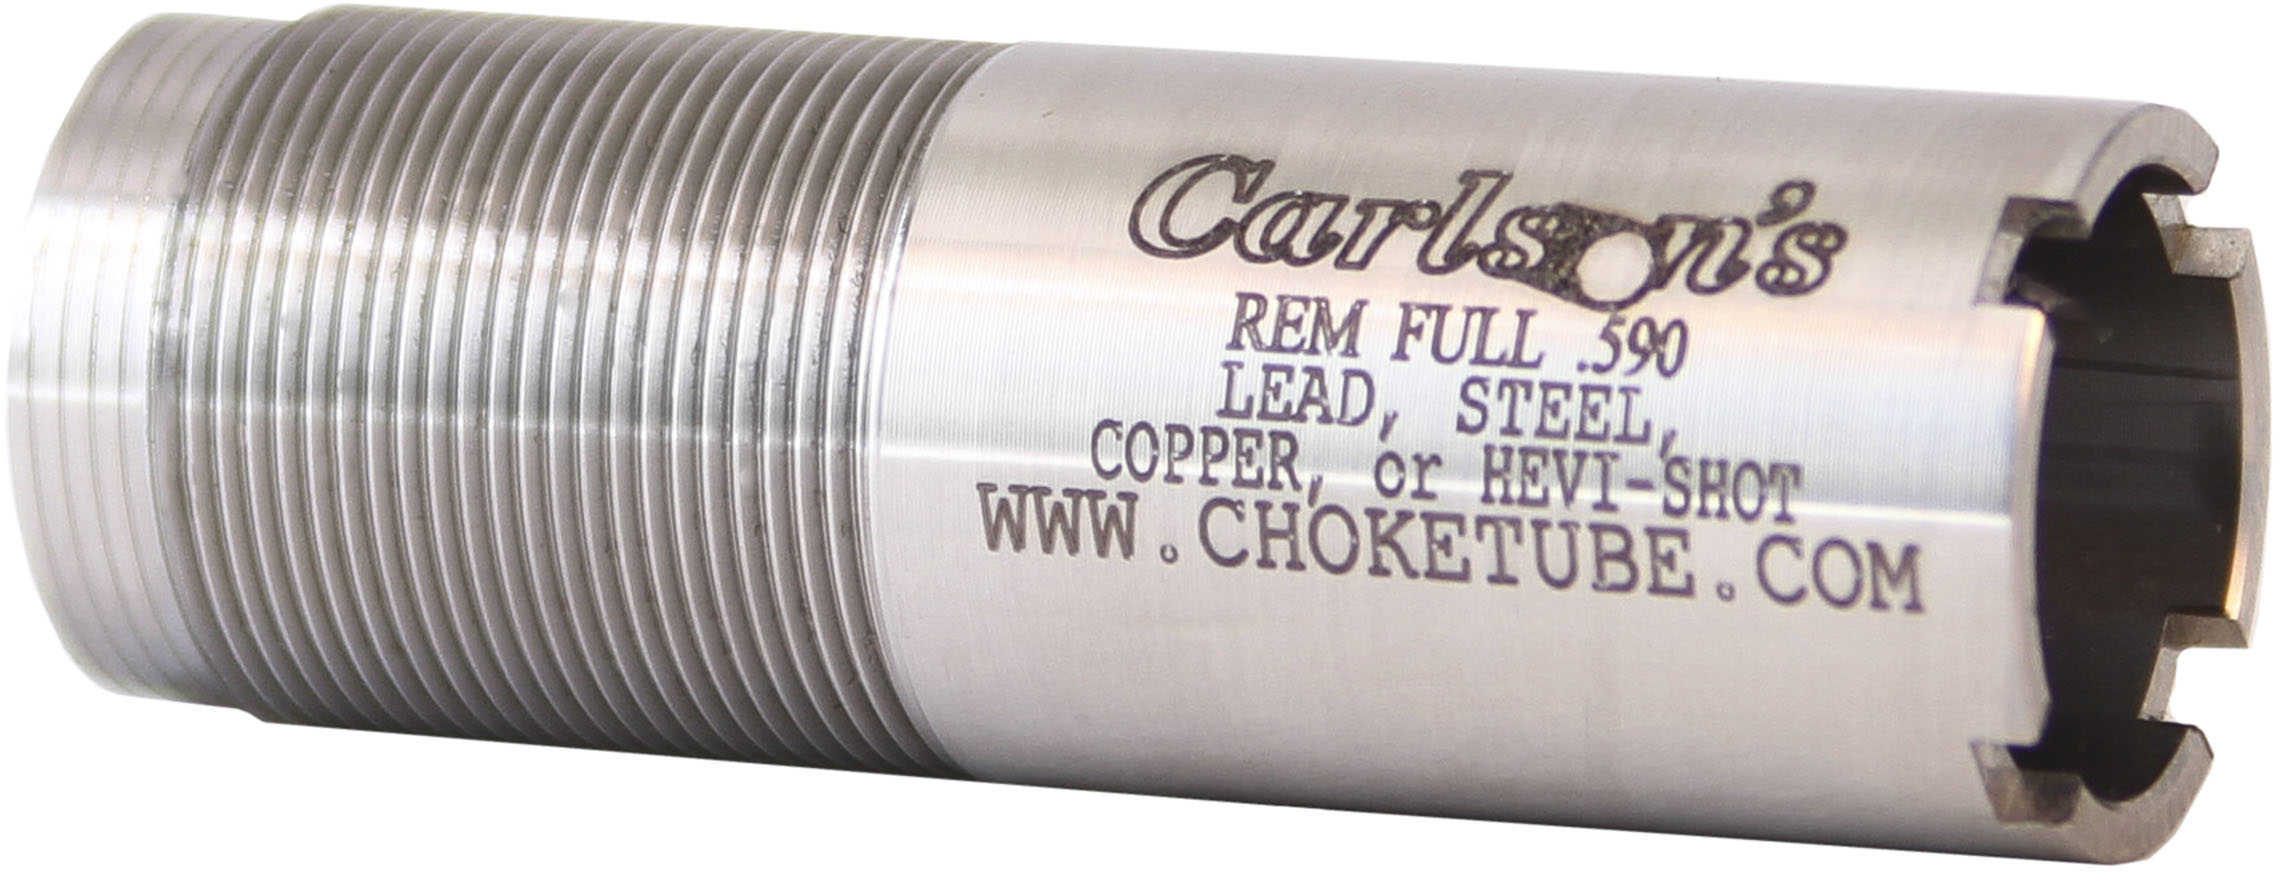 Flush Mount Replacement For Remington Choke Tubes